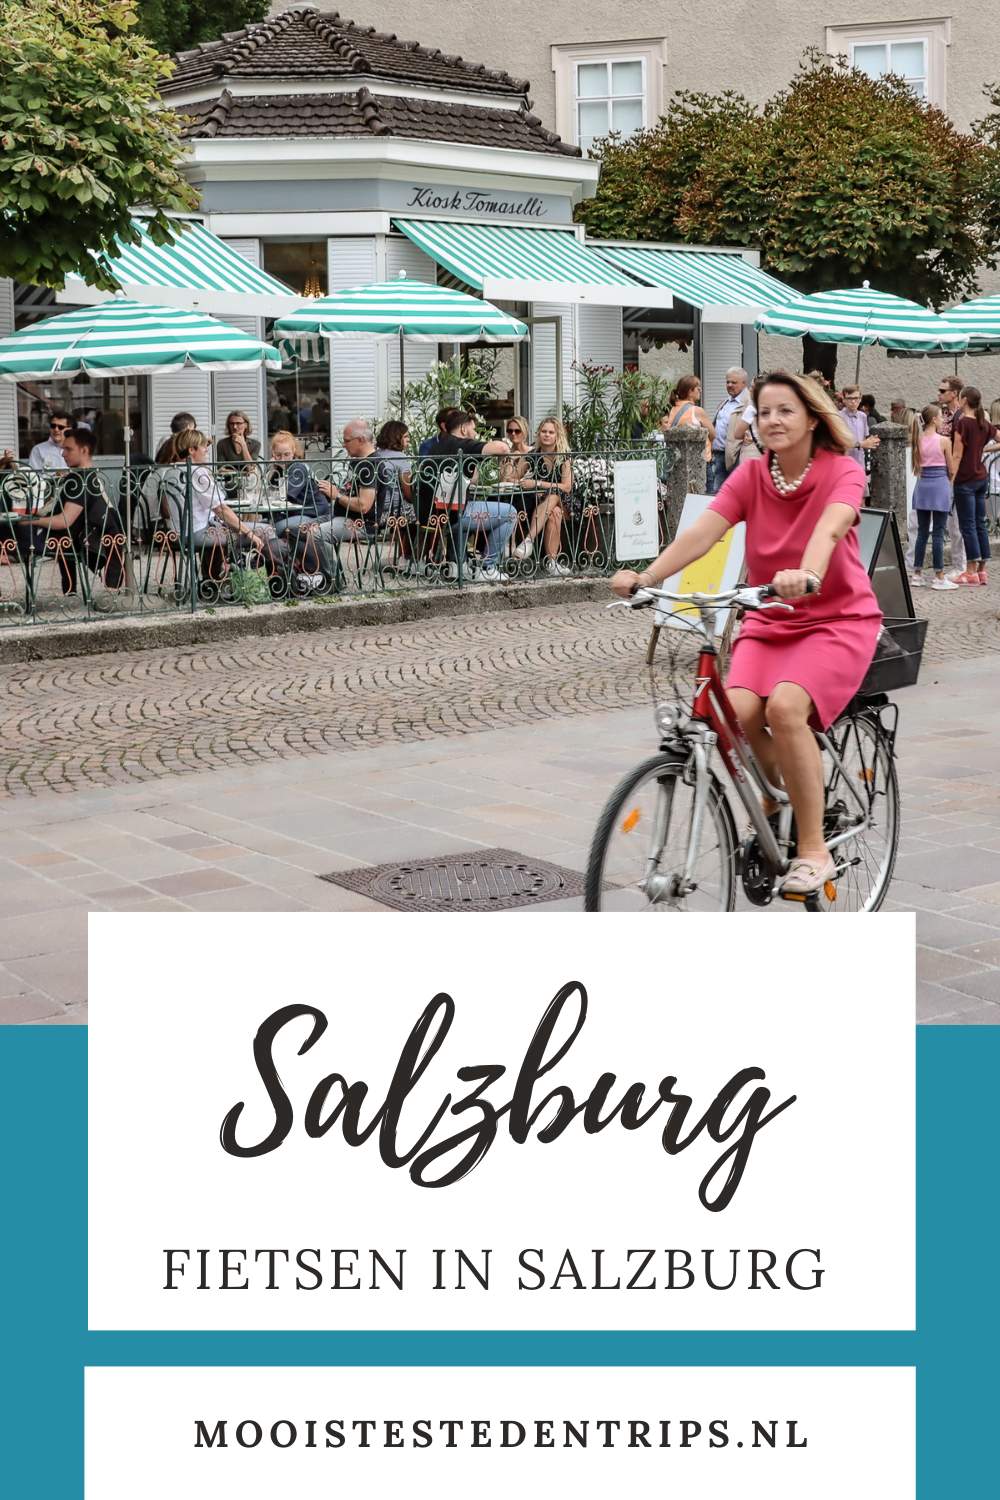 Fietsen in Salzburg: ontdek de highlights van Salzburg op de fiets | Mooistestedentrips.nl